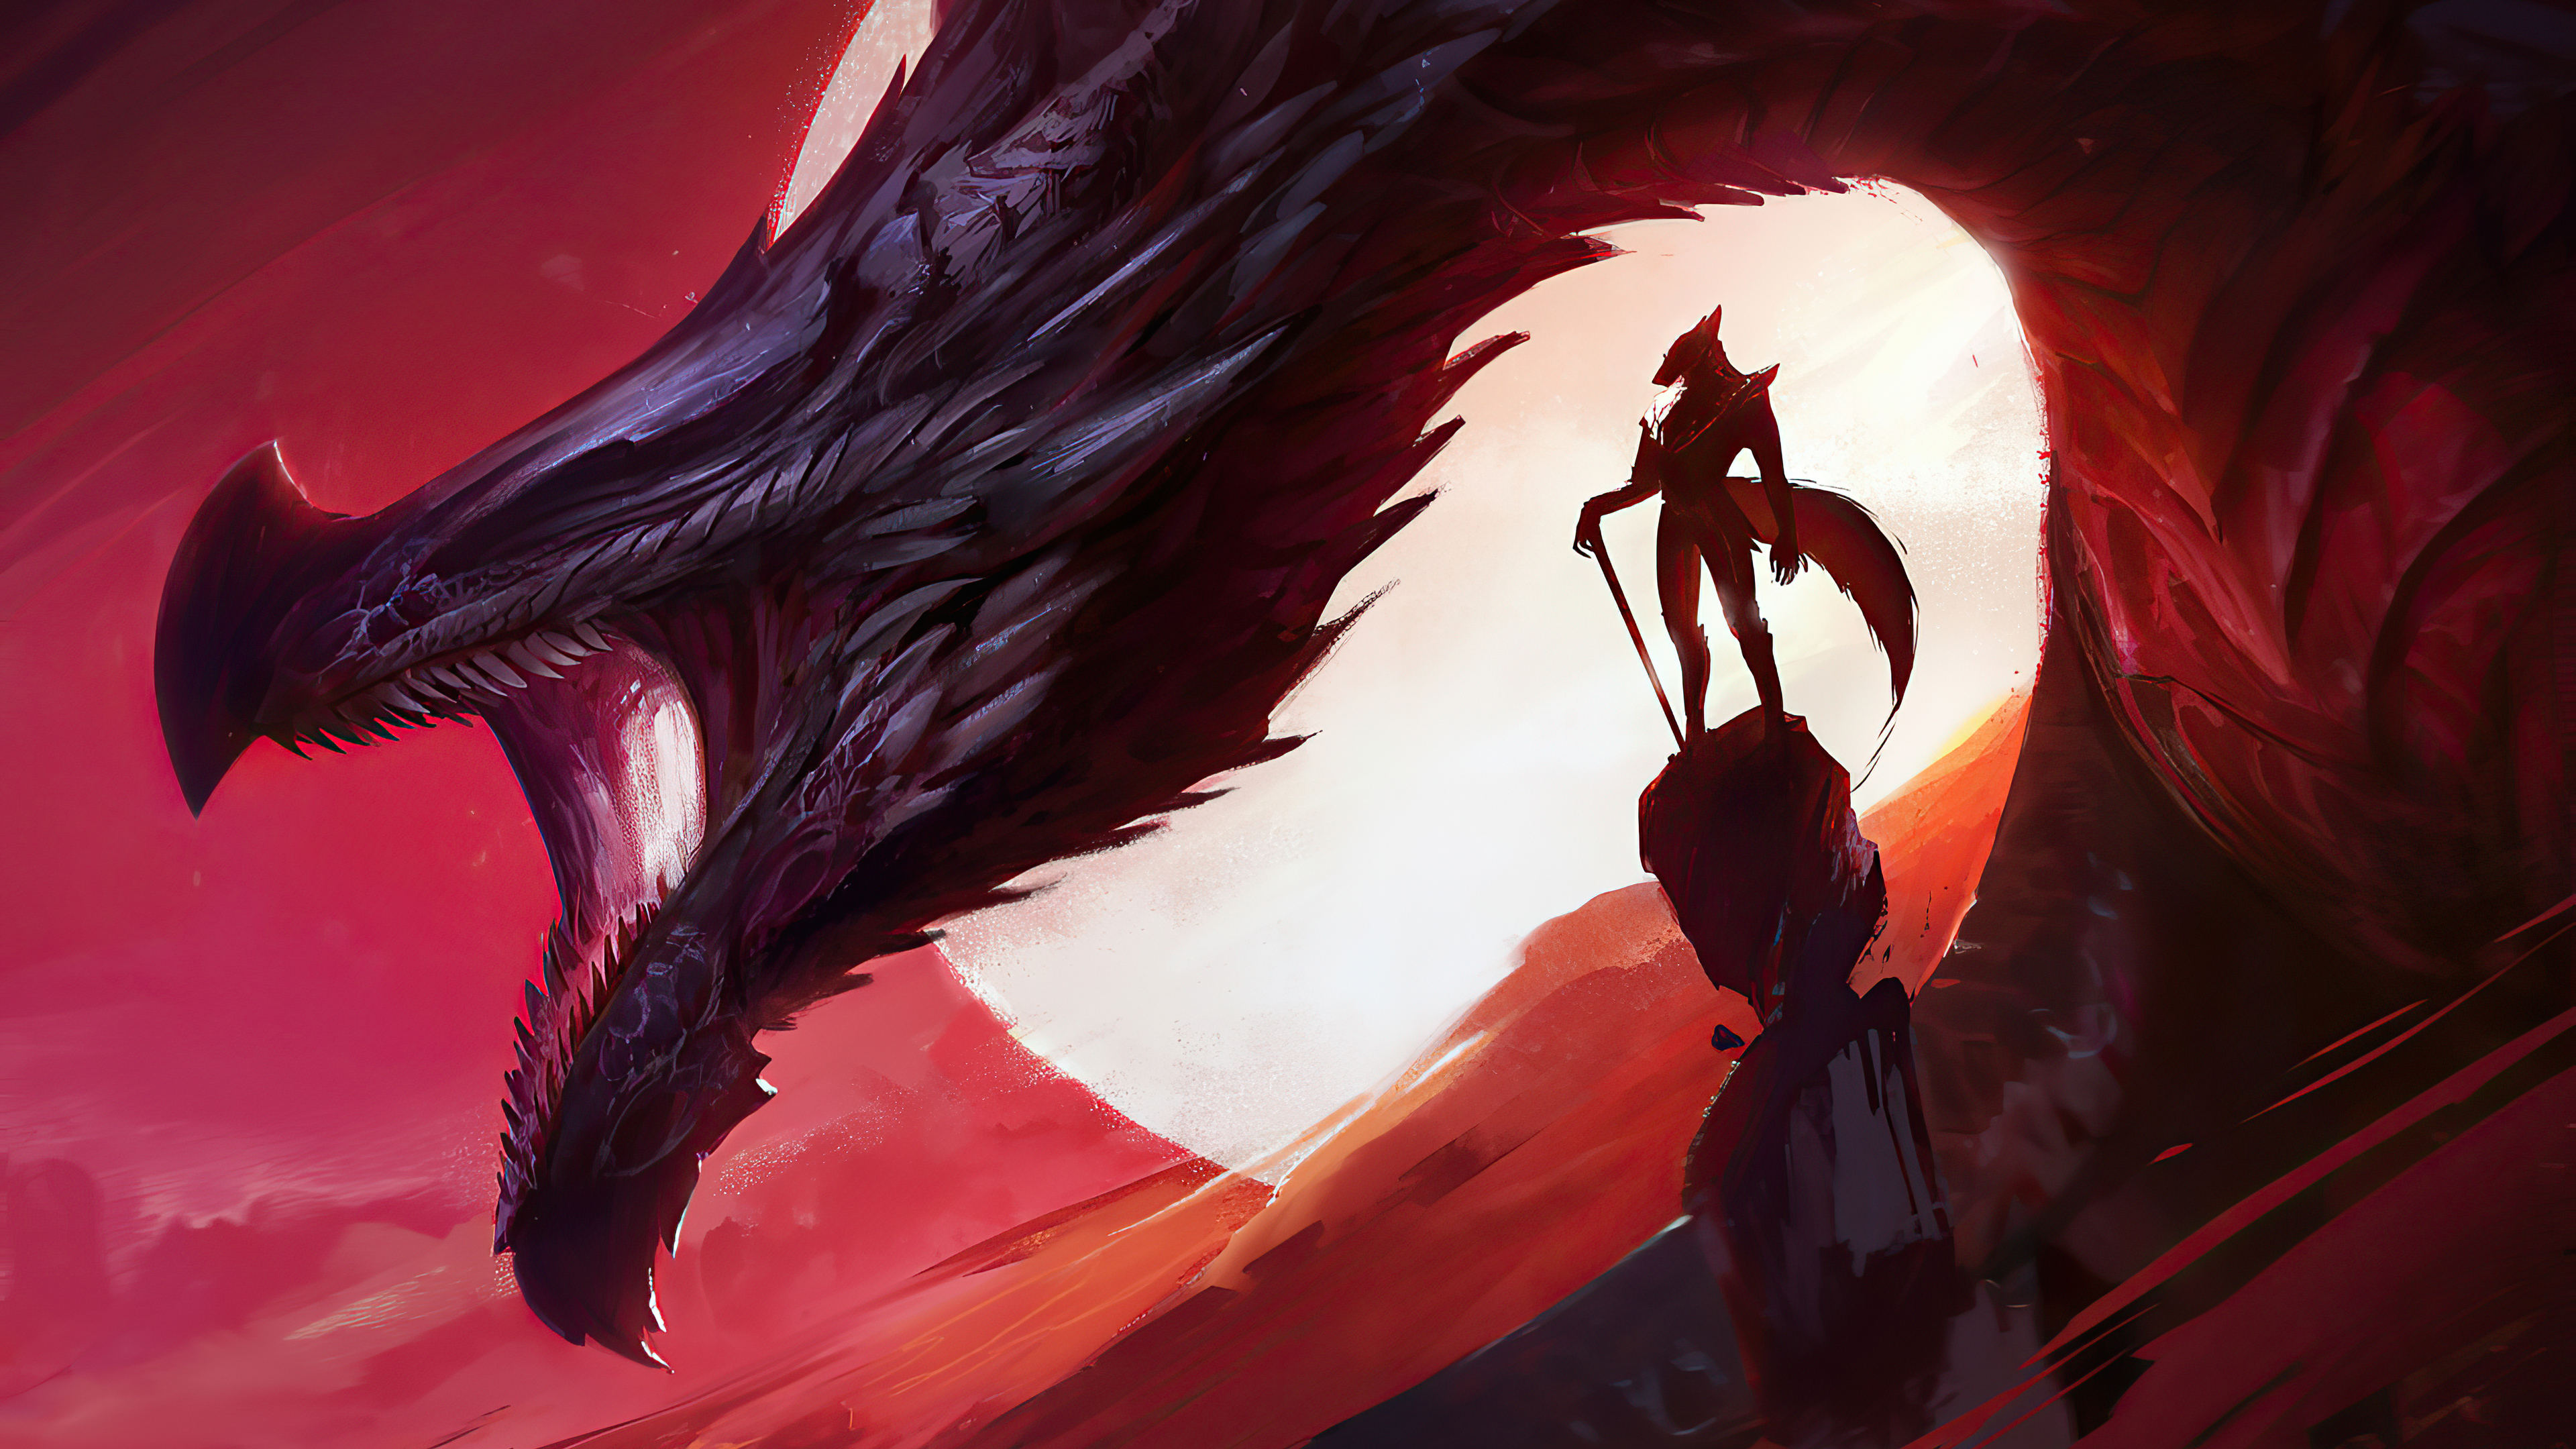 Fantasy Red Dragon Is Standing Near Fire 4K 5K HD Dreamy Wallpapers  HD  Wallpapers  ID 36463